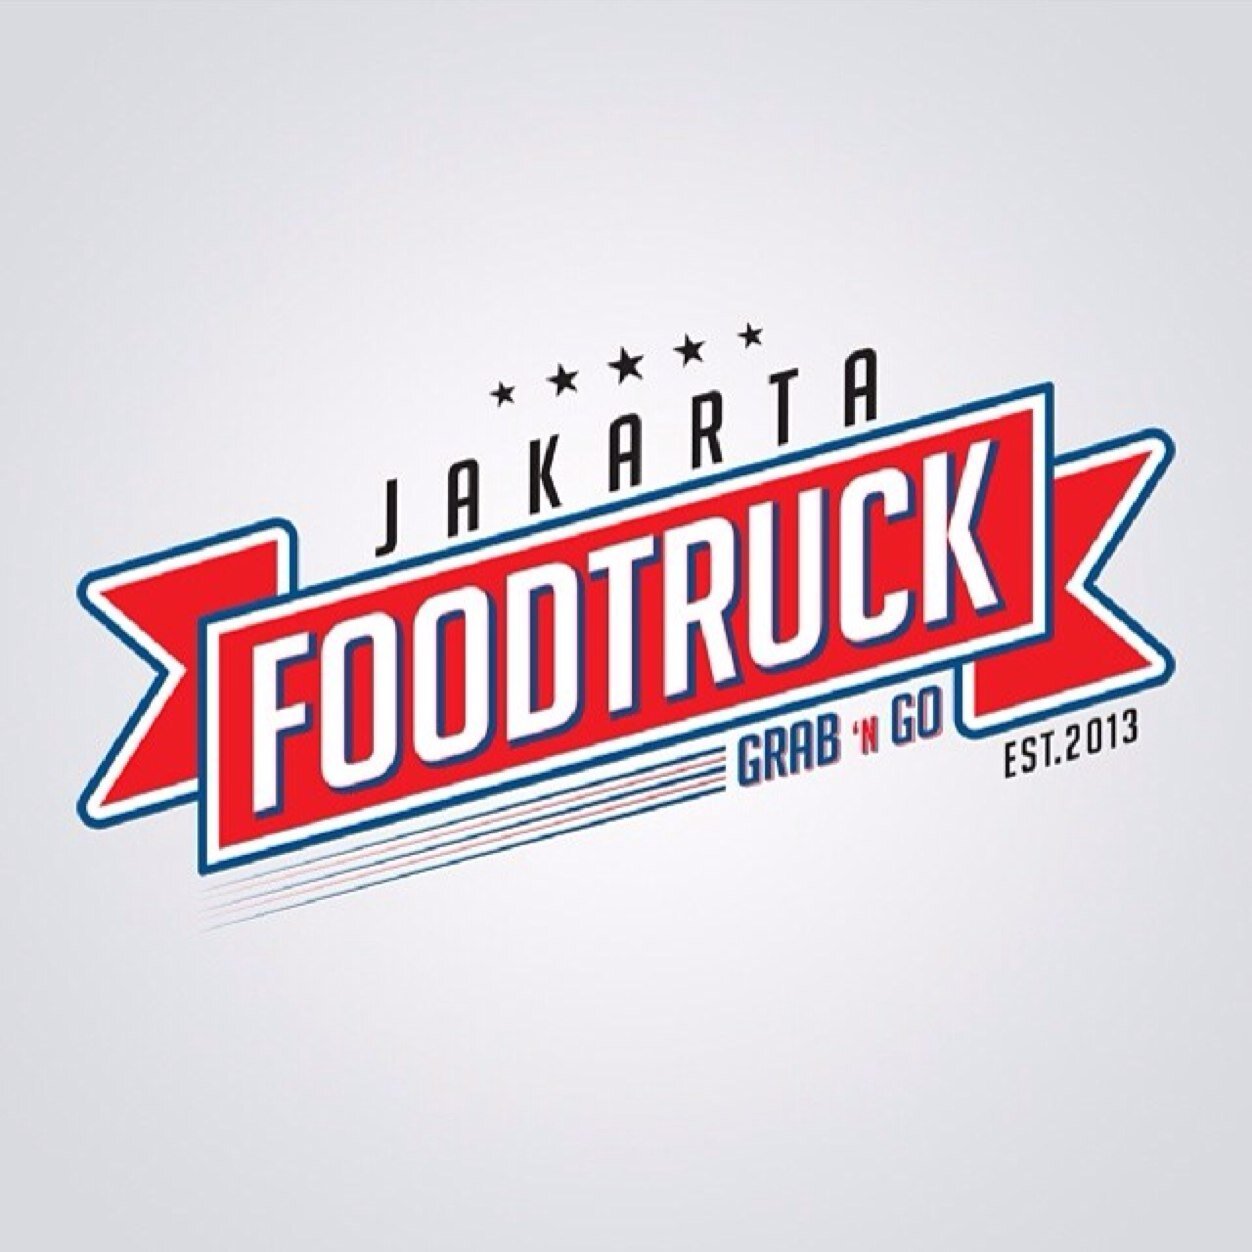 Jakarta Food Truck: Gaya Baru Jajanan di Jakarta